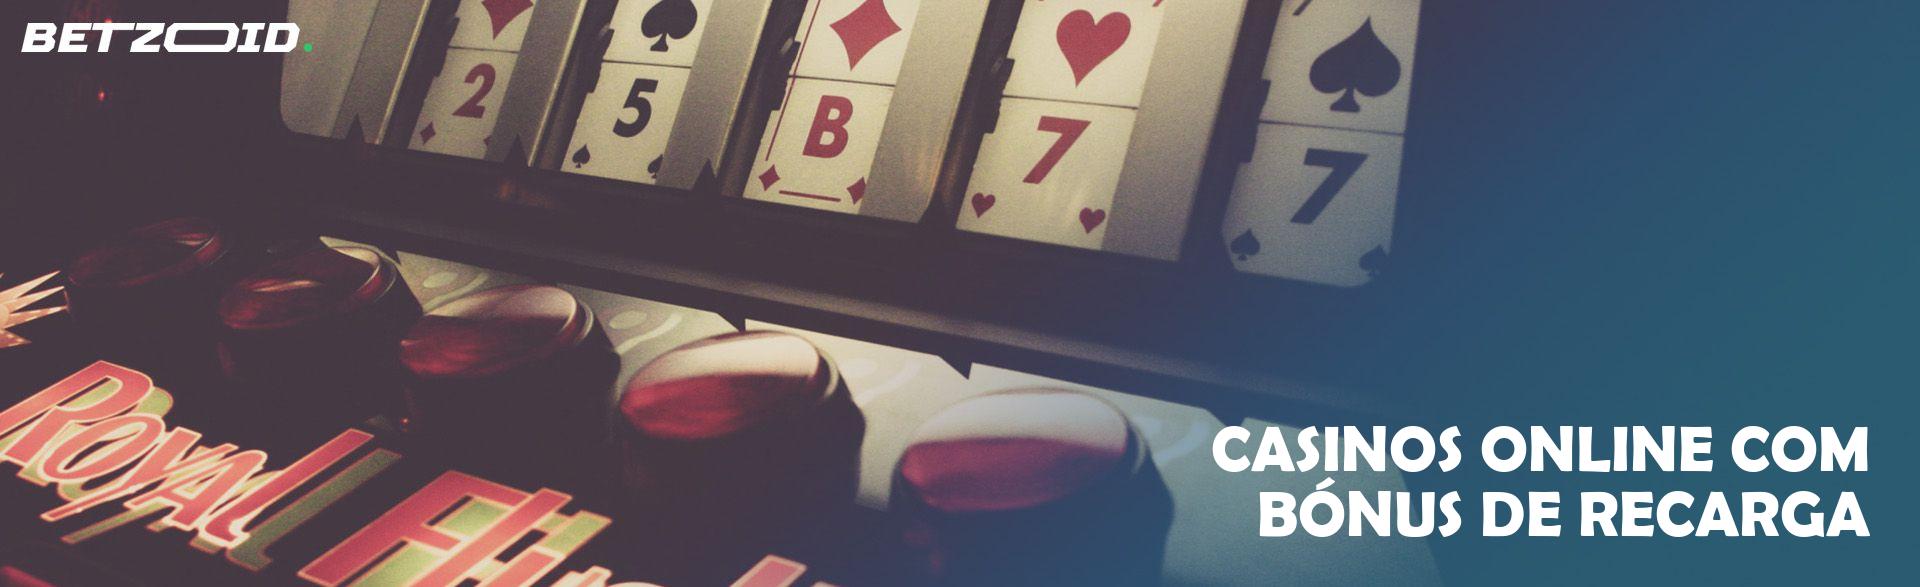 Casinos Online com Bónus de Recarga.